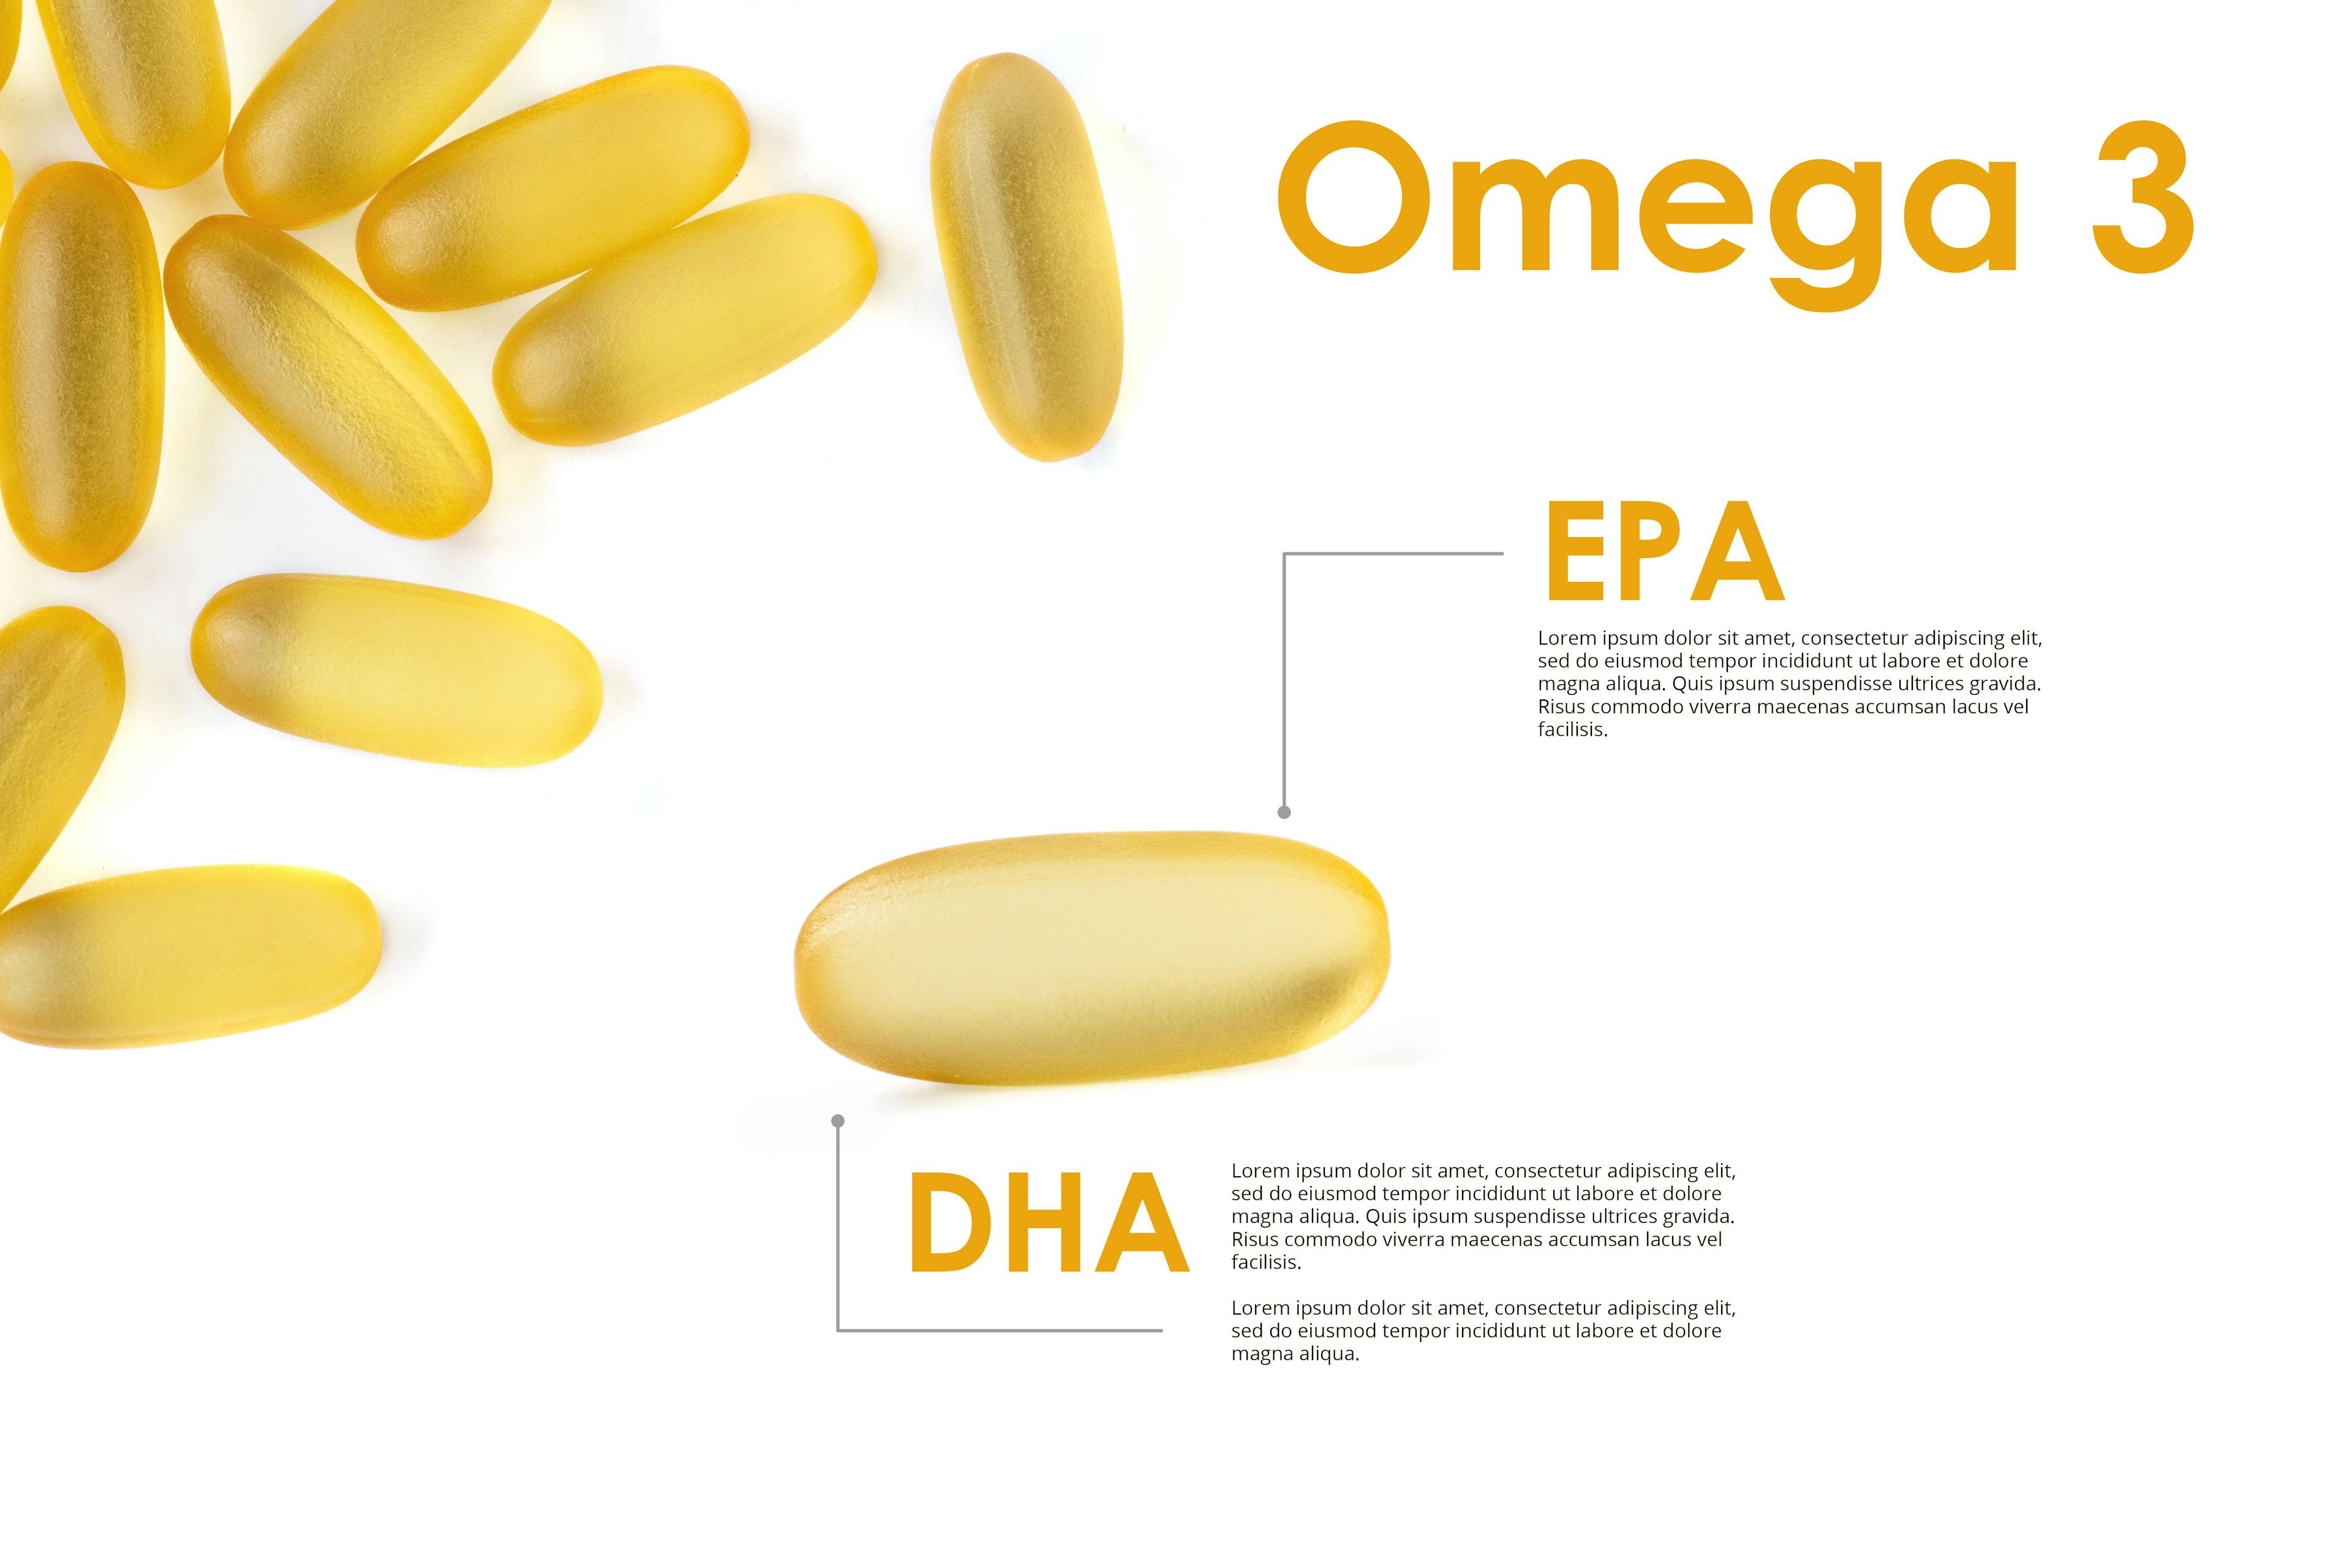 omega-3 capsules with DHA and EPA shown | Image credit: ©Svetlana Sotnikova stock.adobe.com